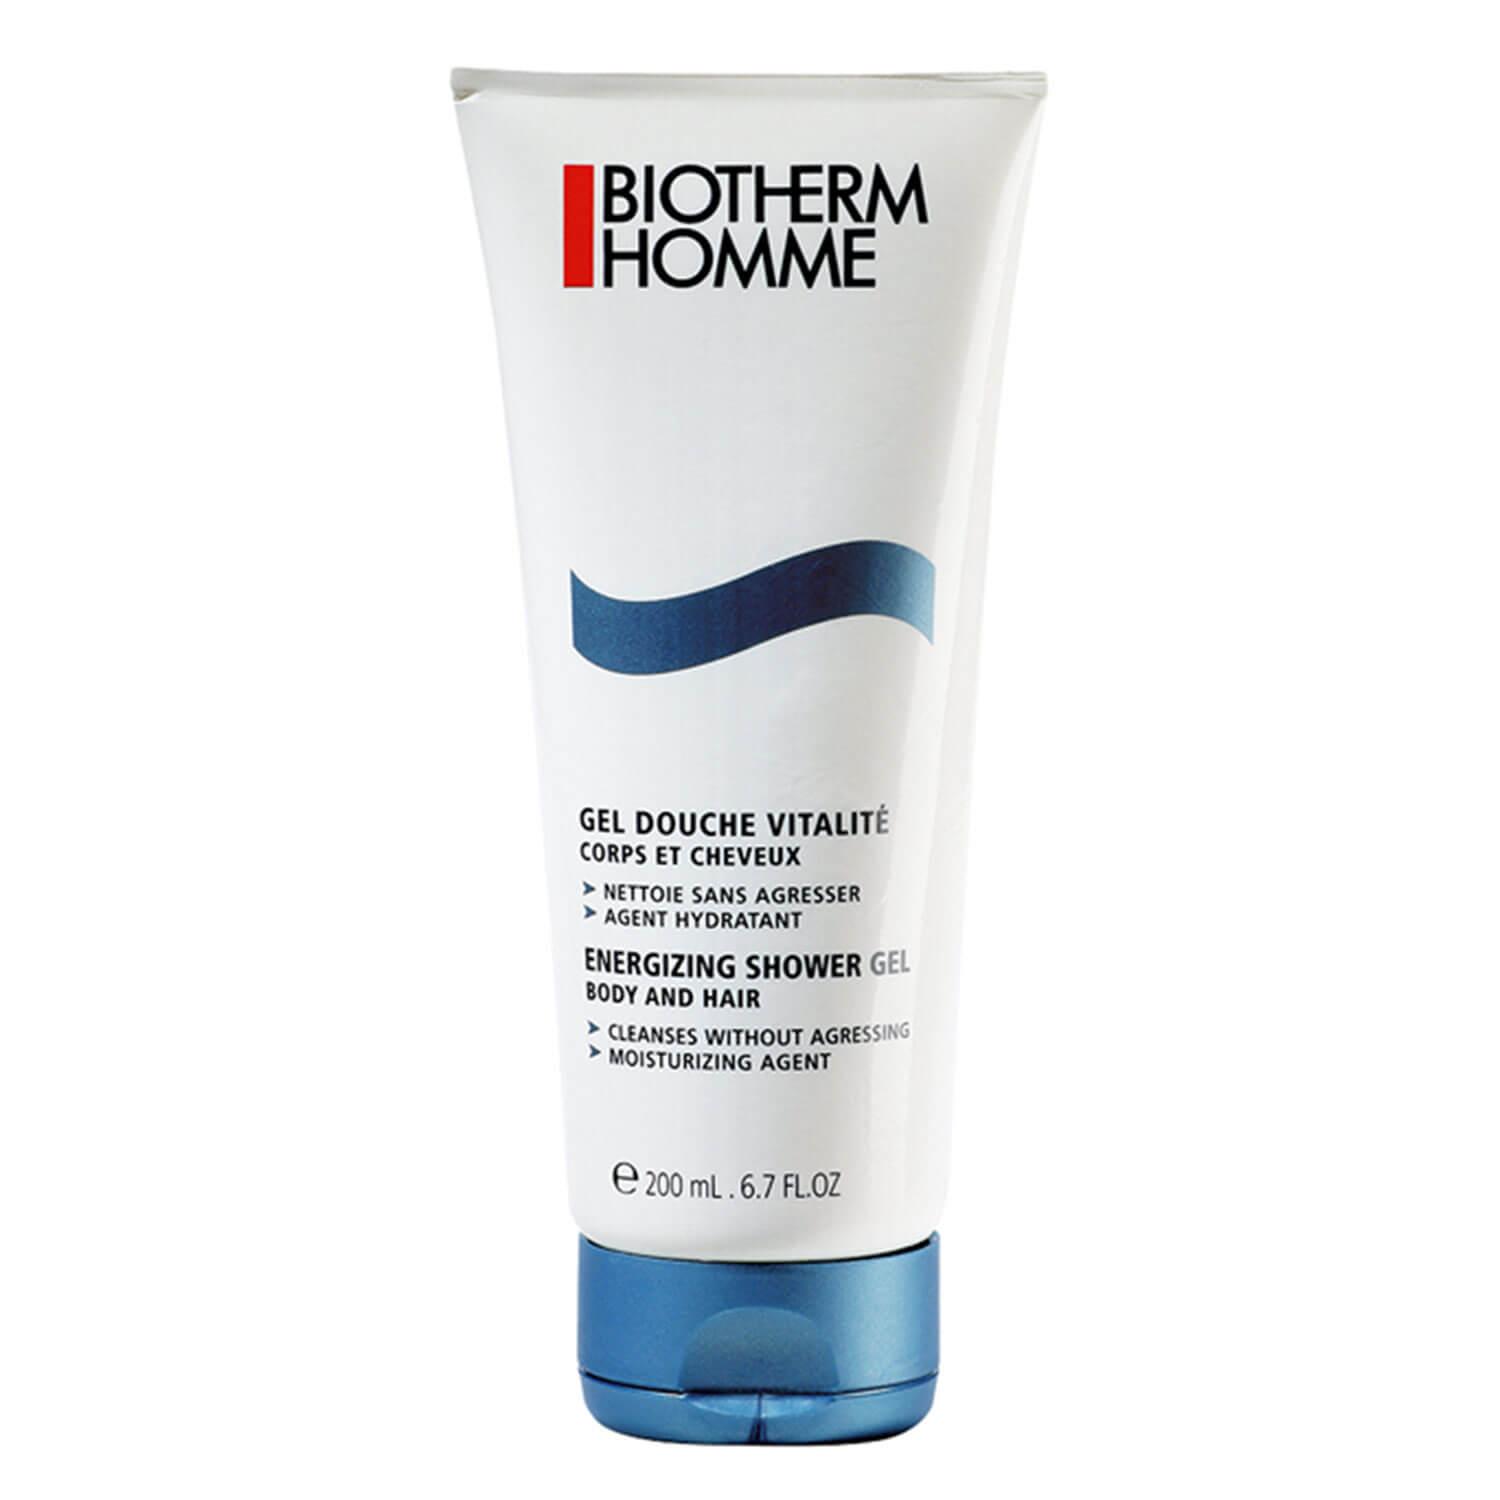 Biotherm Homme - Energizing Shower Gel